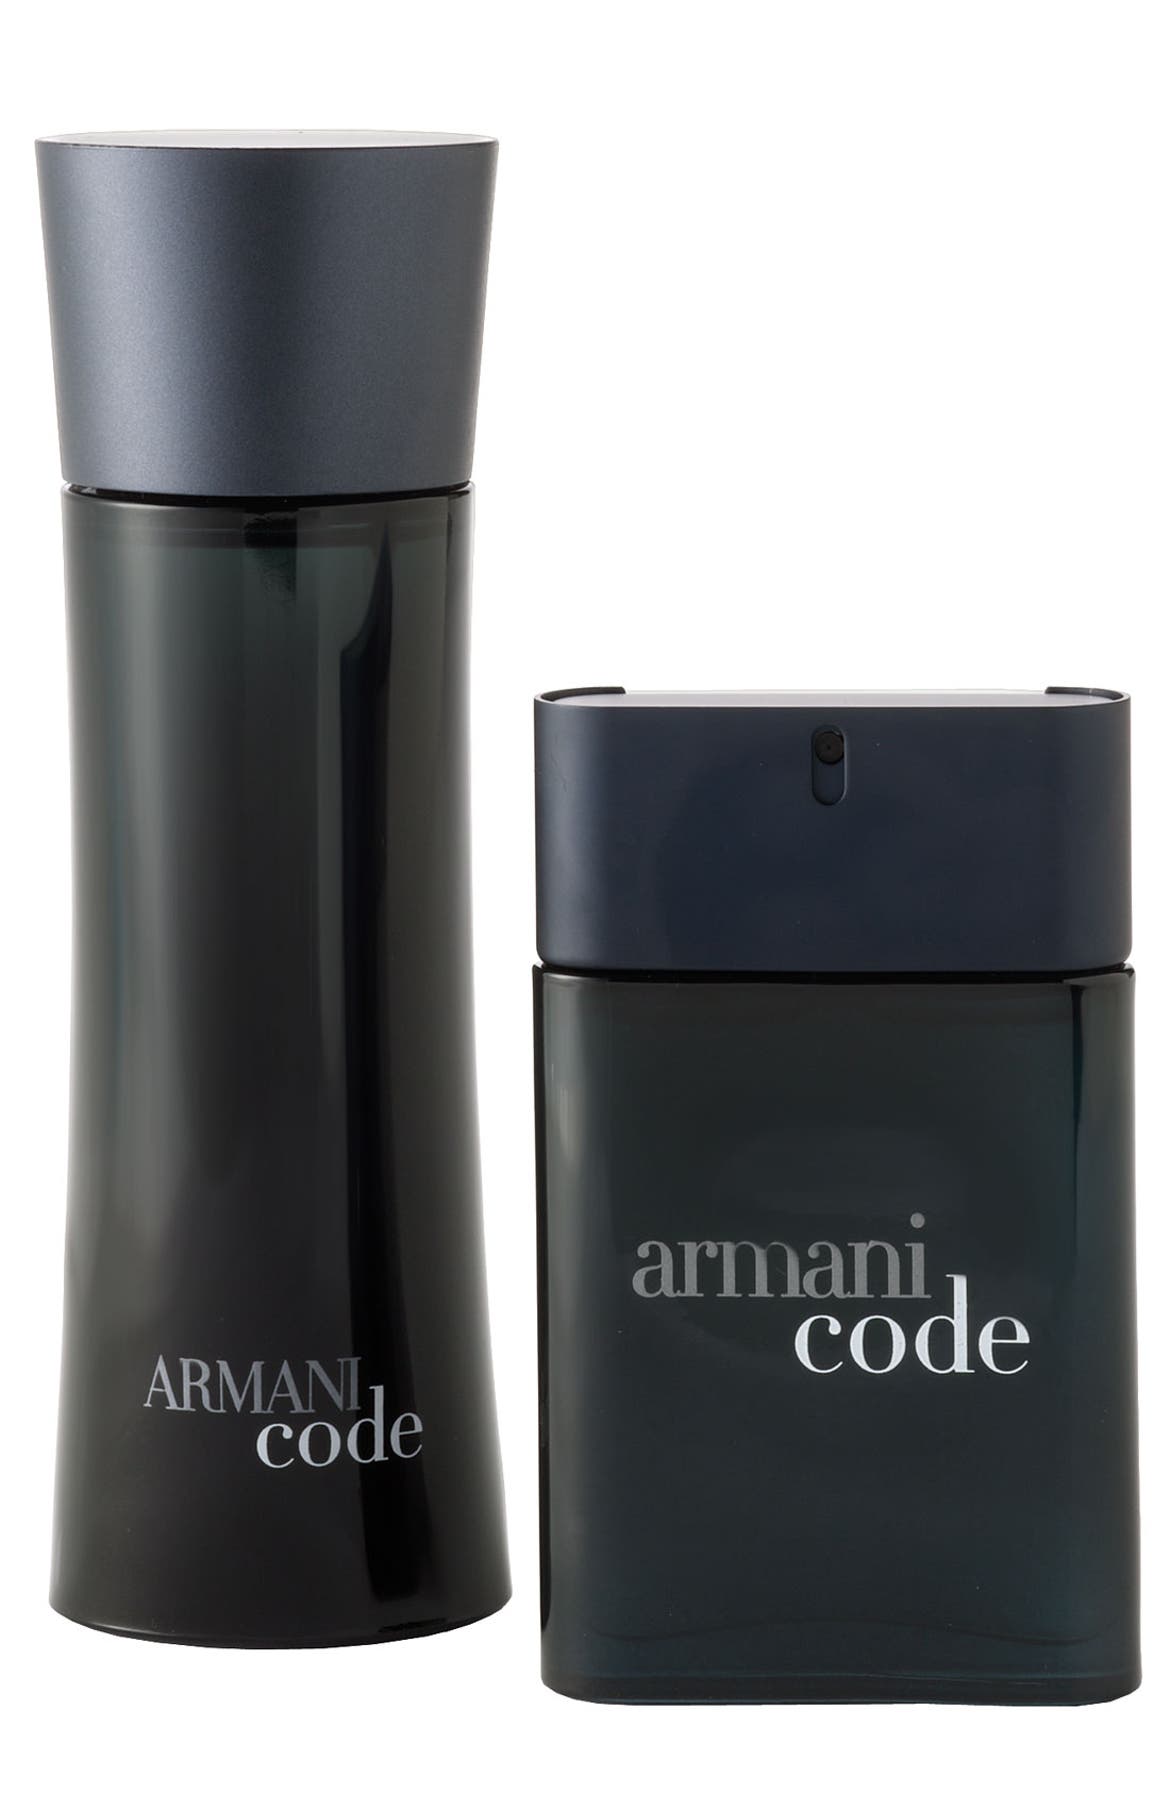 armani code travel bag